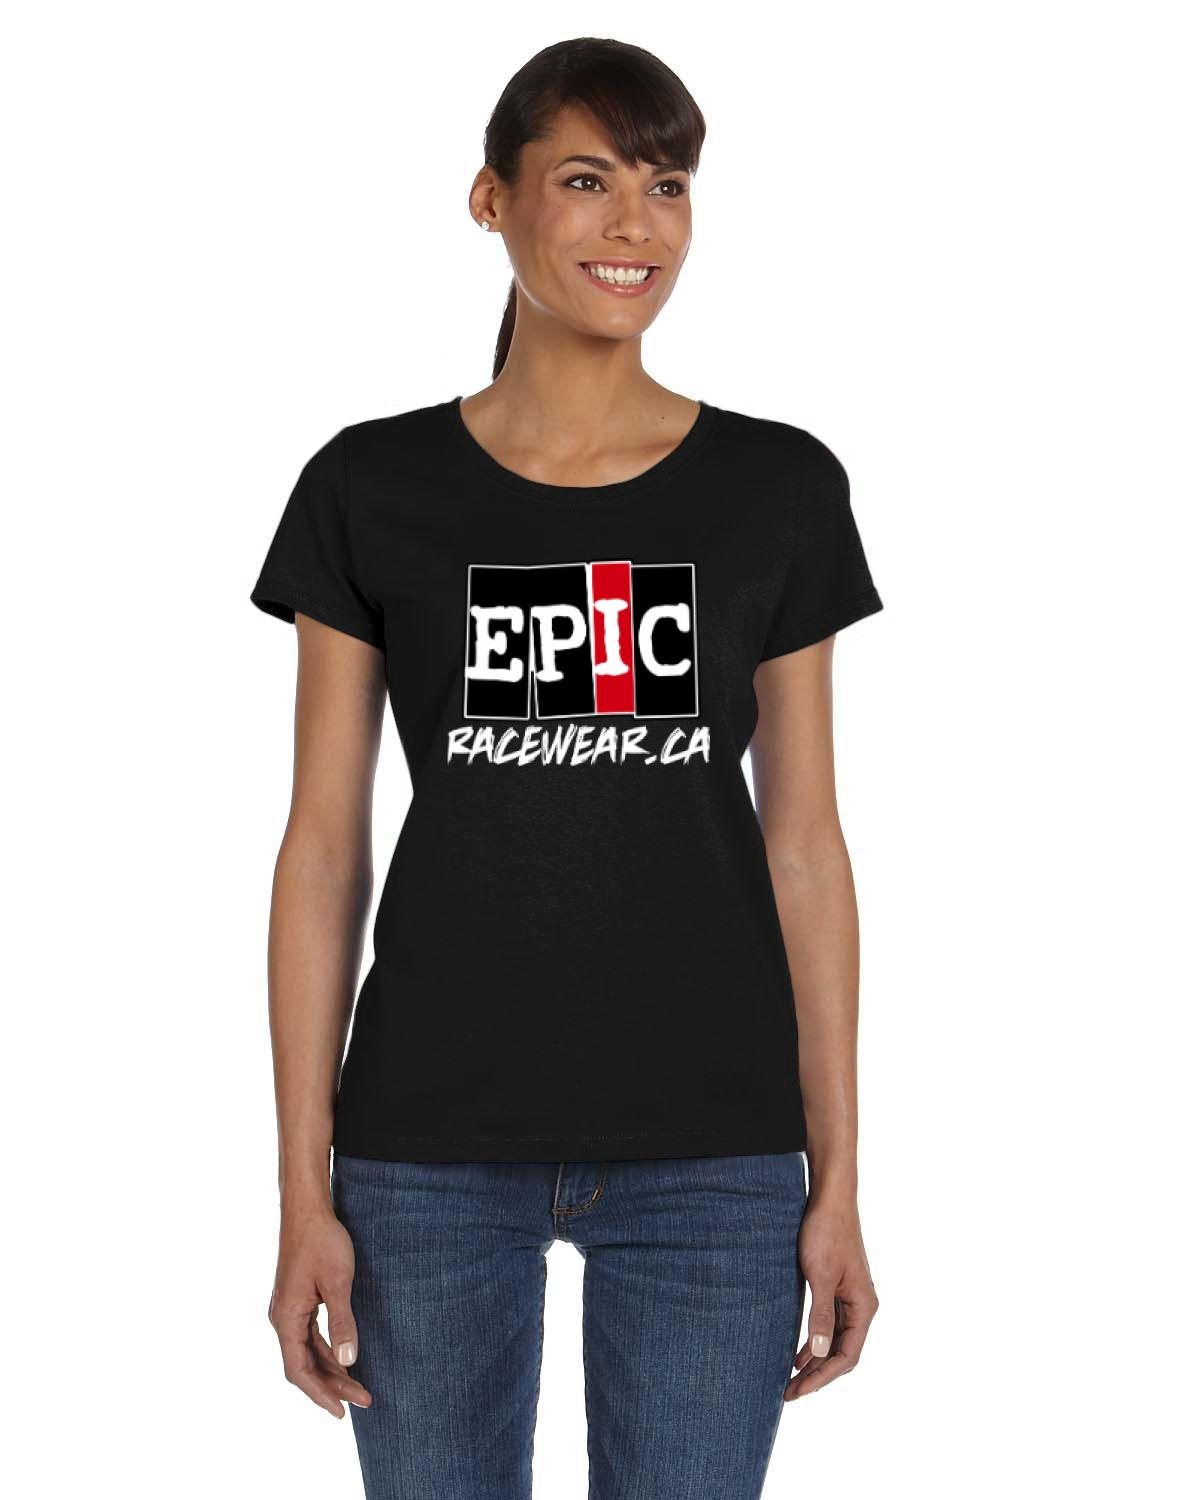 EPIC Racewear Ladies Tshirt